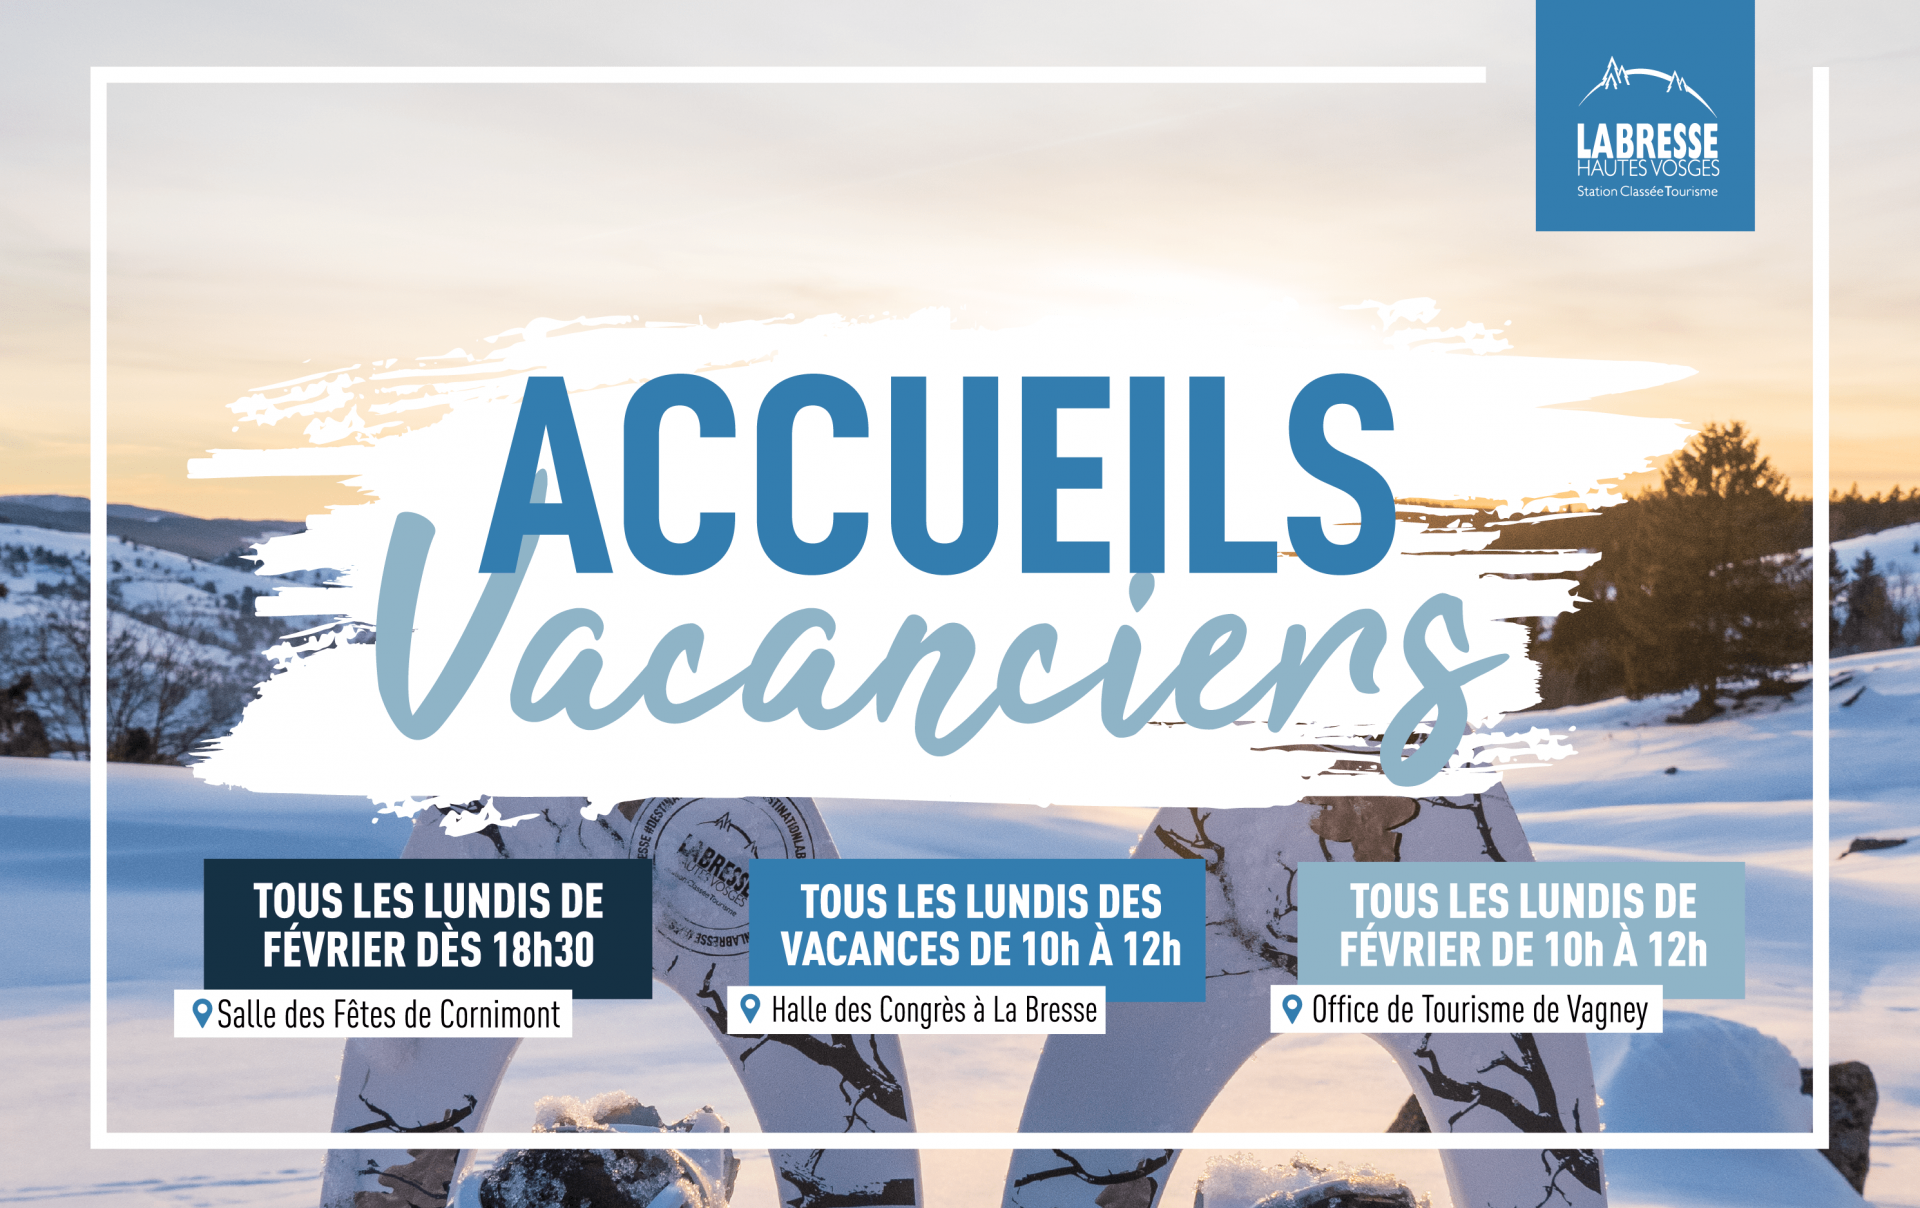 Les Accueils Vacanciers - Hiver 2022/2023 - Hautes Vosges